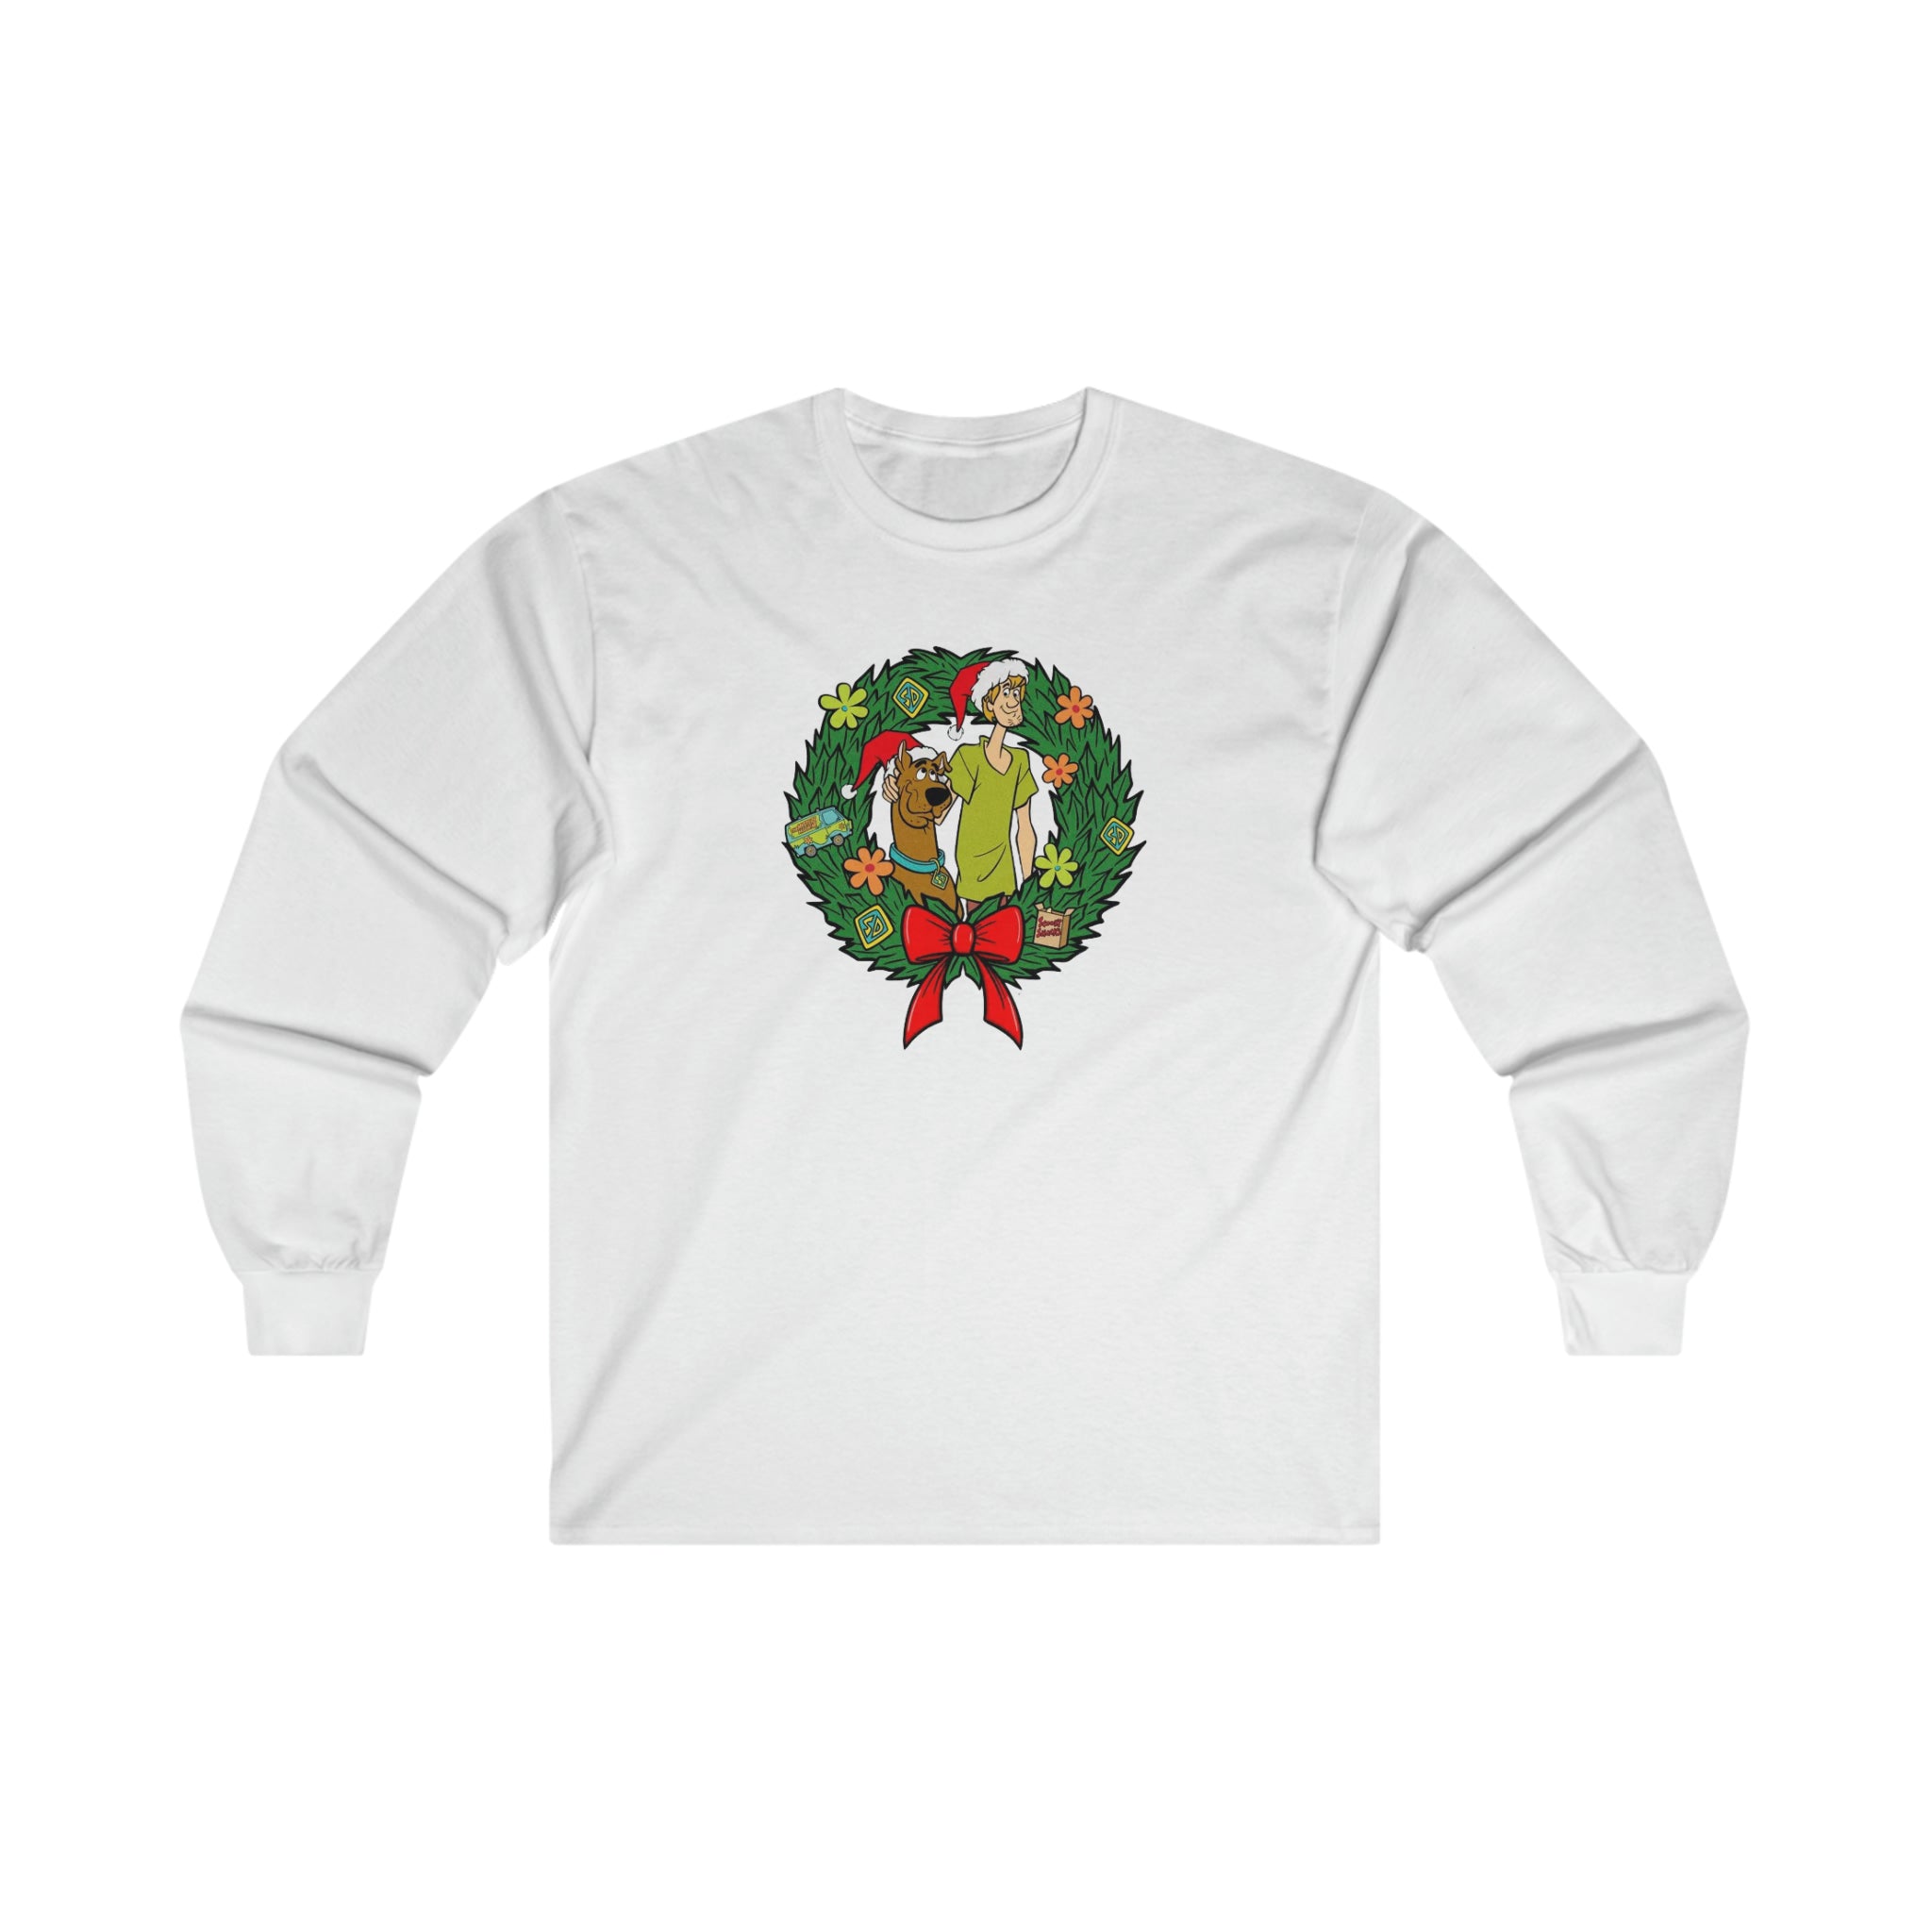 Scooby Gang Wreath Long-Sleeve T-Shirt